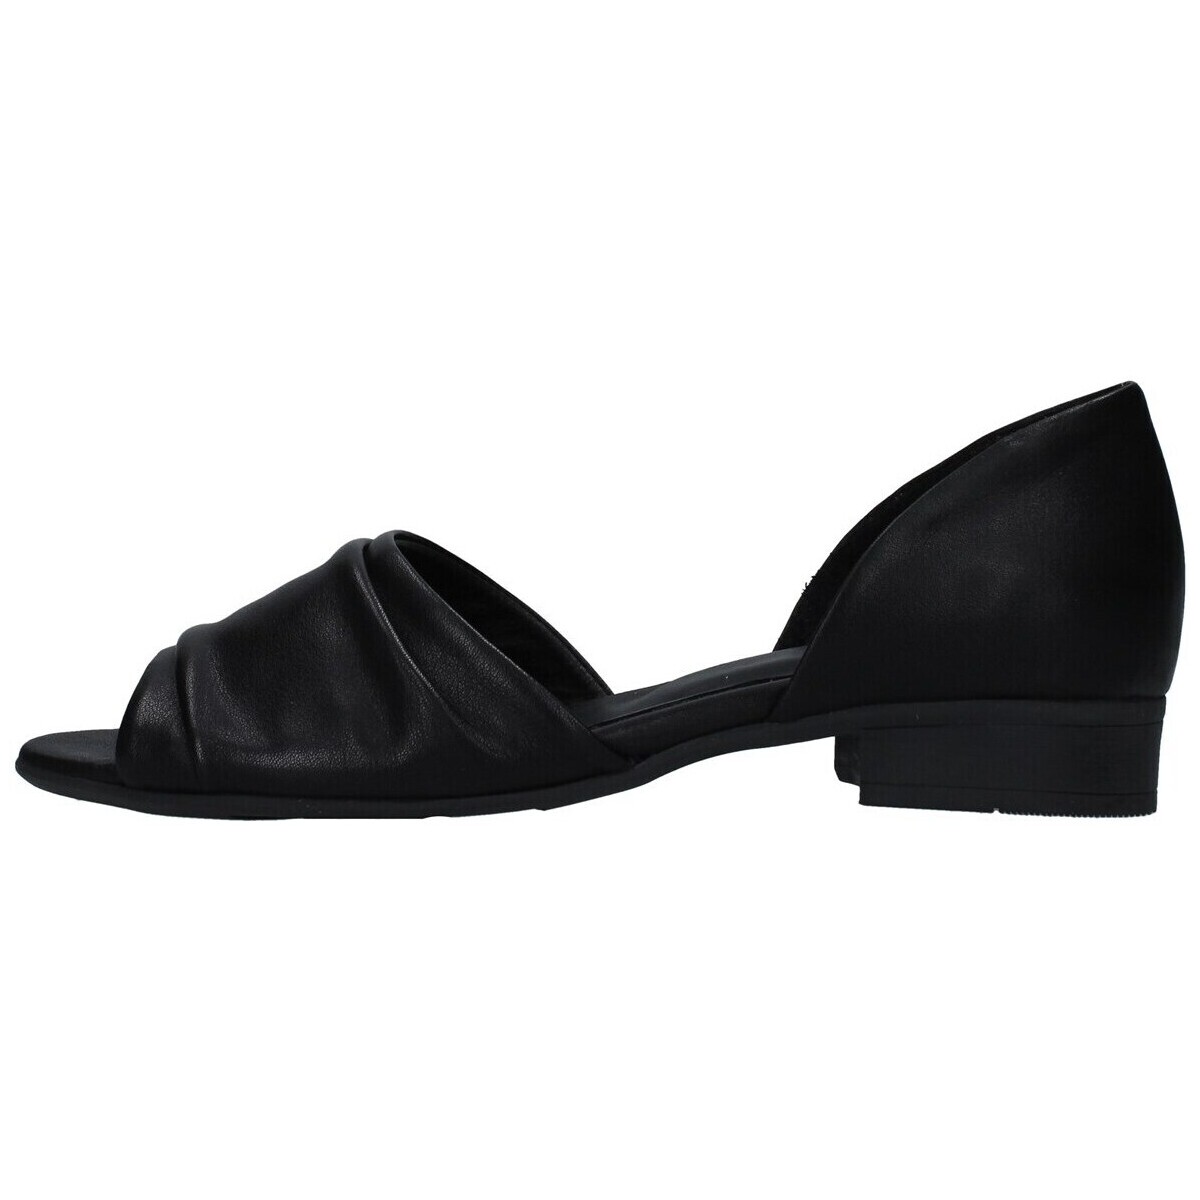 Sko Dame Sandaler Bueno Shoes WY6100 Sort